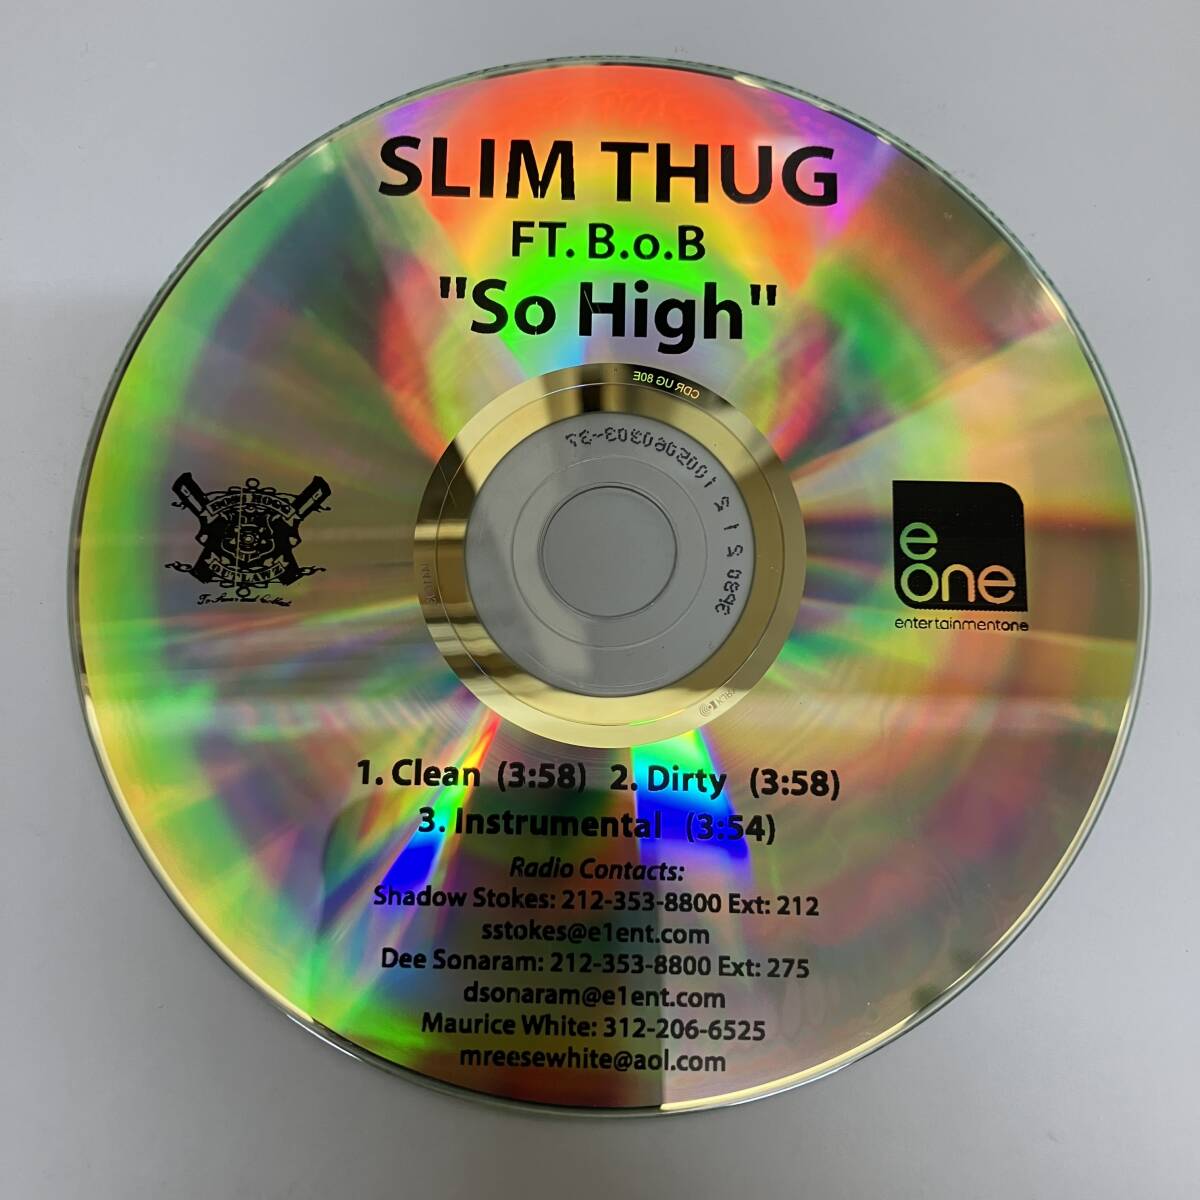 .k rear box HIPHOP,R&B SLIM THUG - SO HIGH INST, single CD secondhand goods 